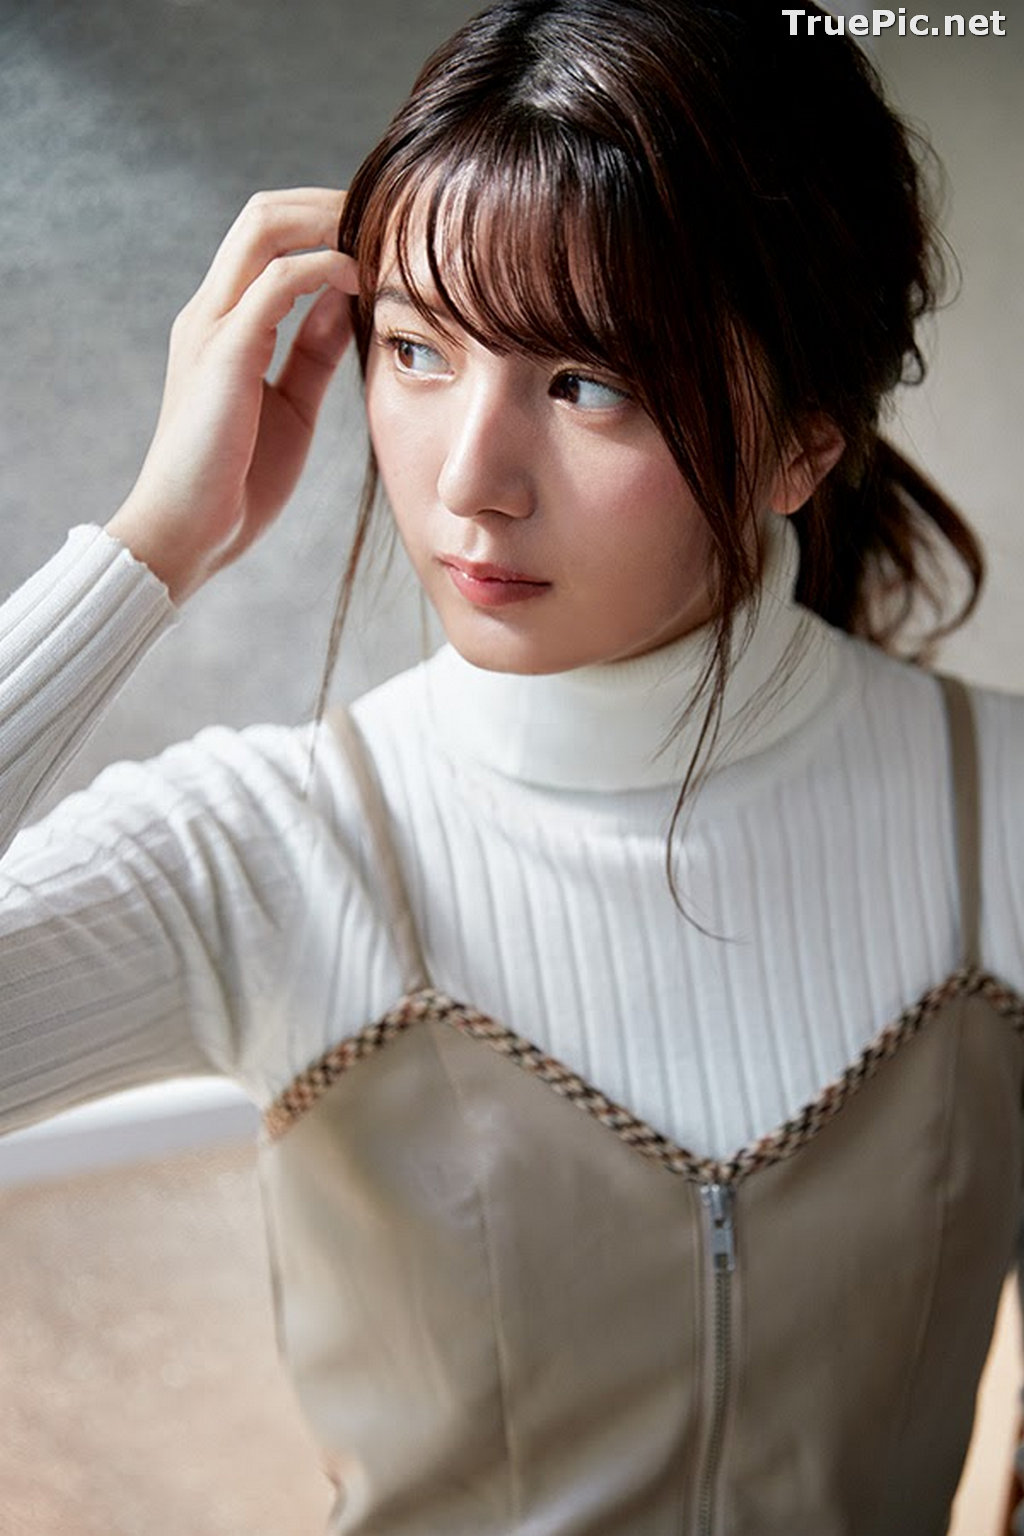 Image Japanese Idol Singer - Yumiko Seki (関有美子) - Beautiful Picture Collection 2020 - TruePic.net - Picture-15